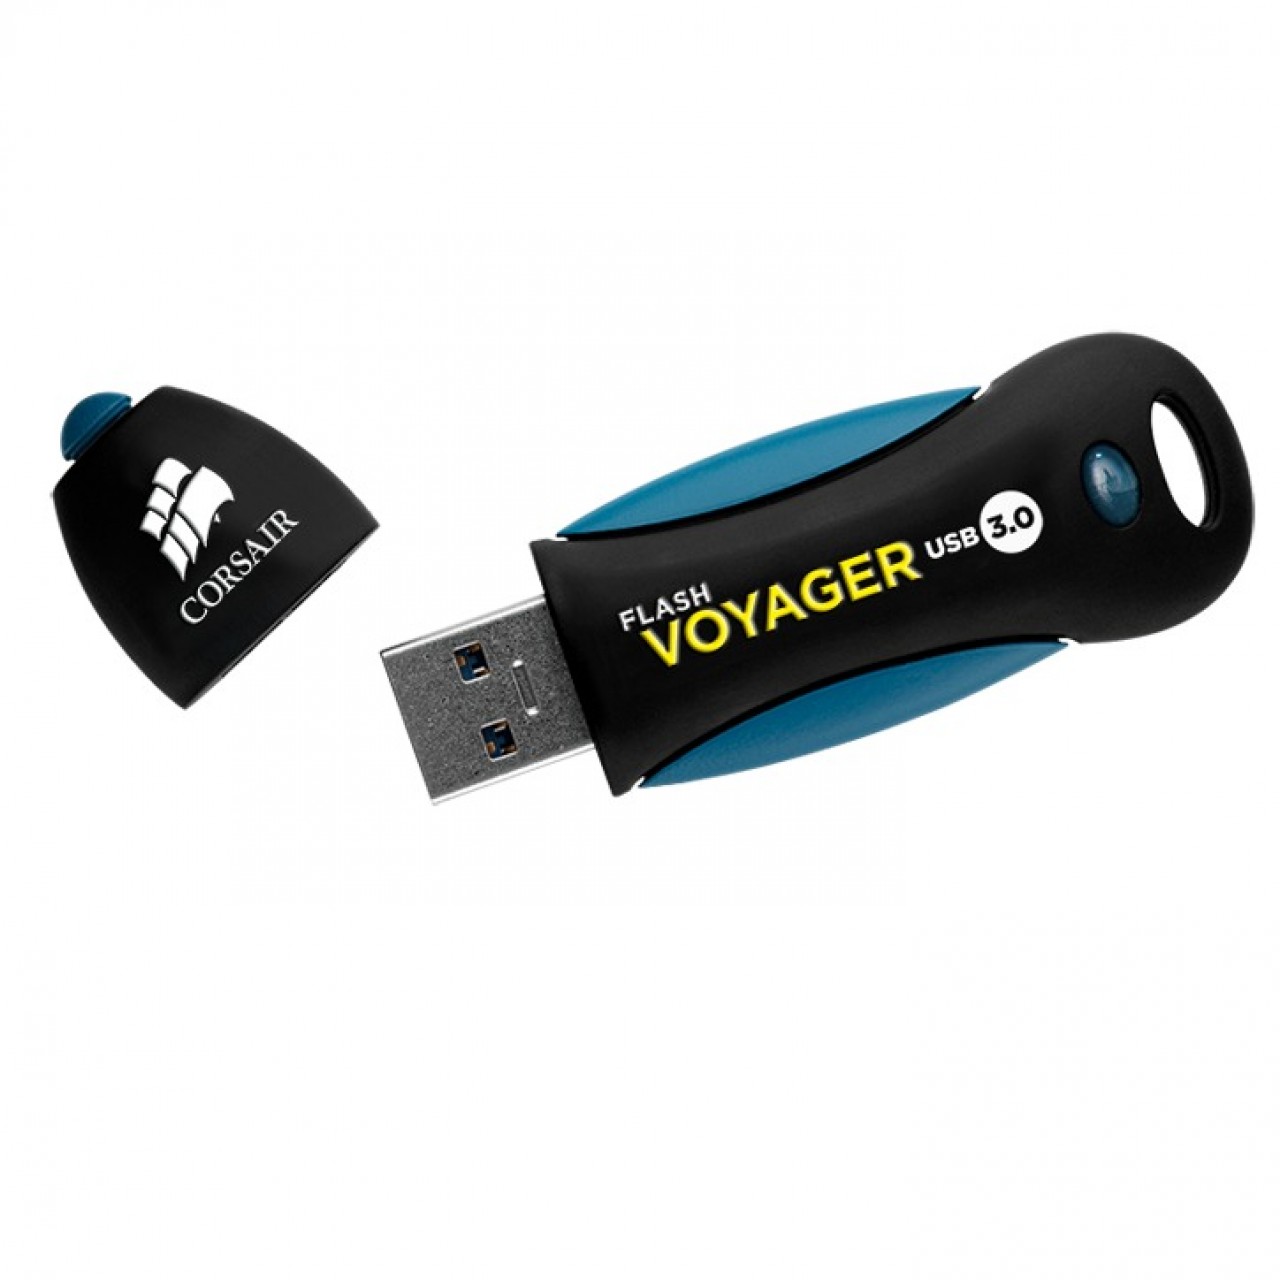 22. Corsair Flash Voyager® - 16GB Storage - 3.0 Flash Drive – Shock Proof – Water Resistant